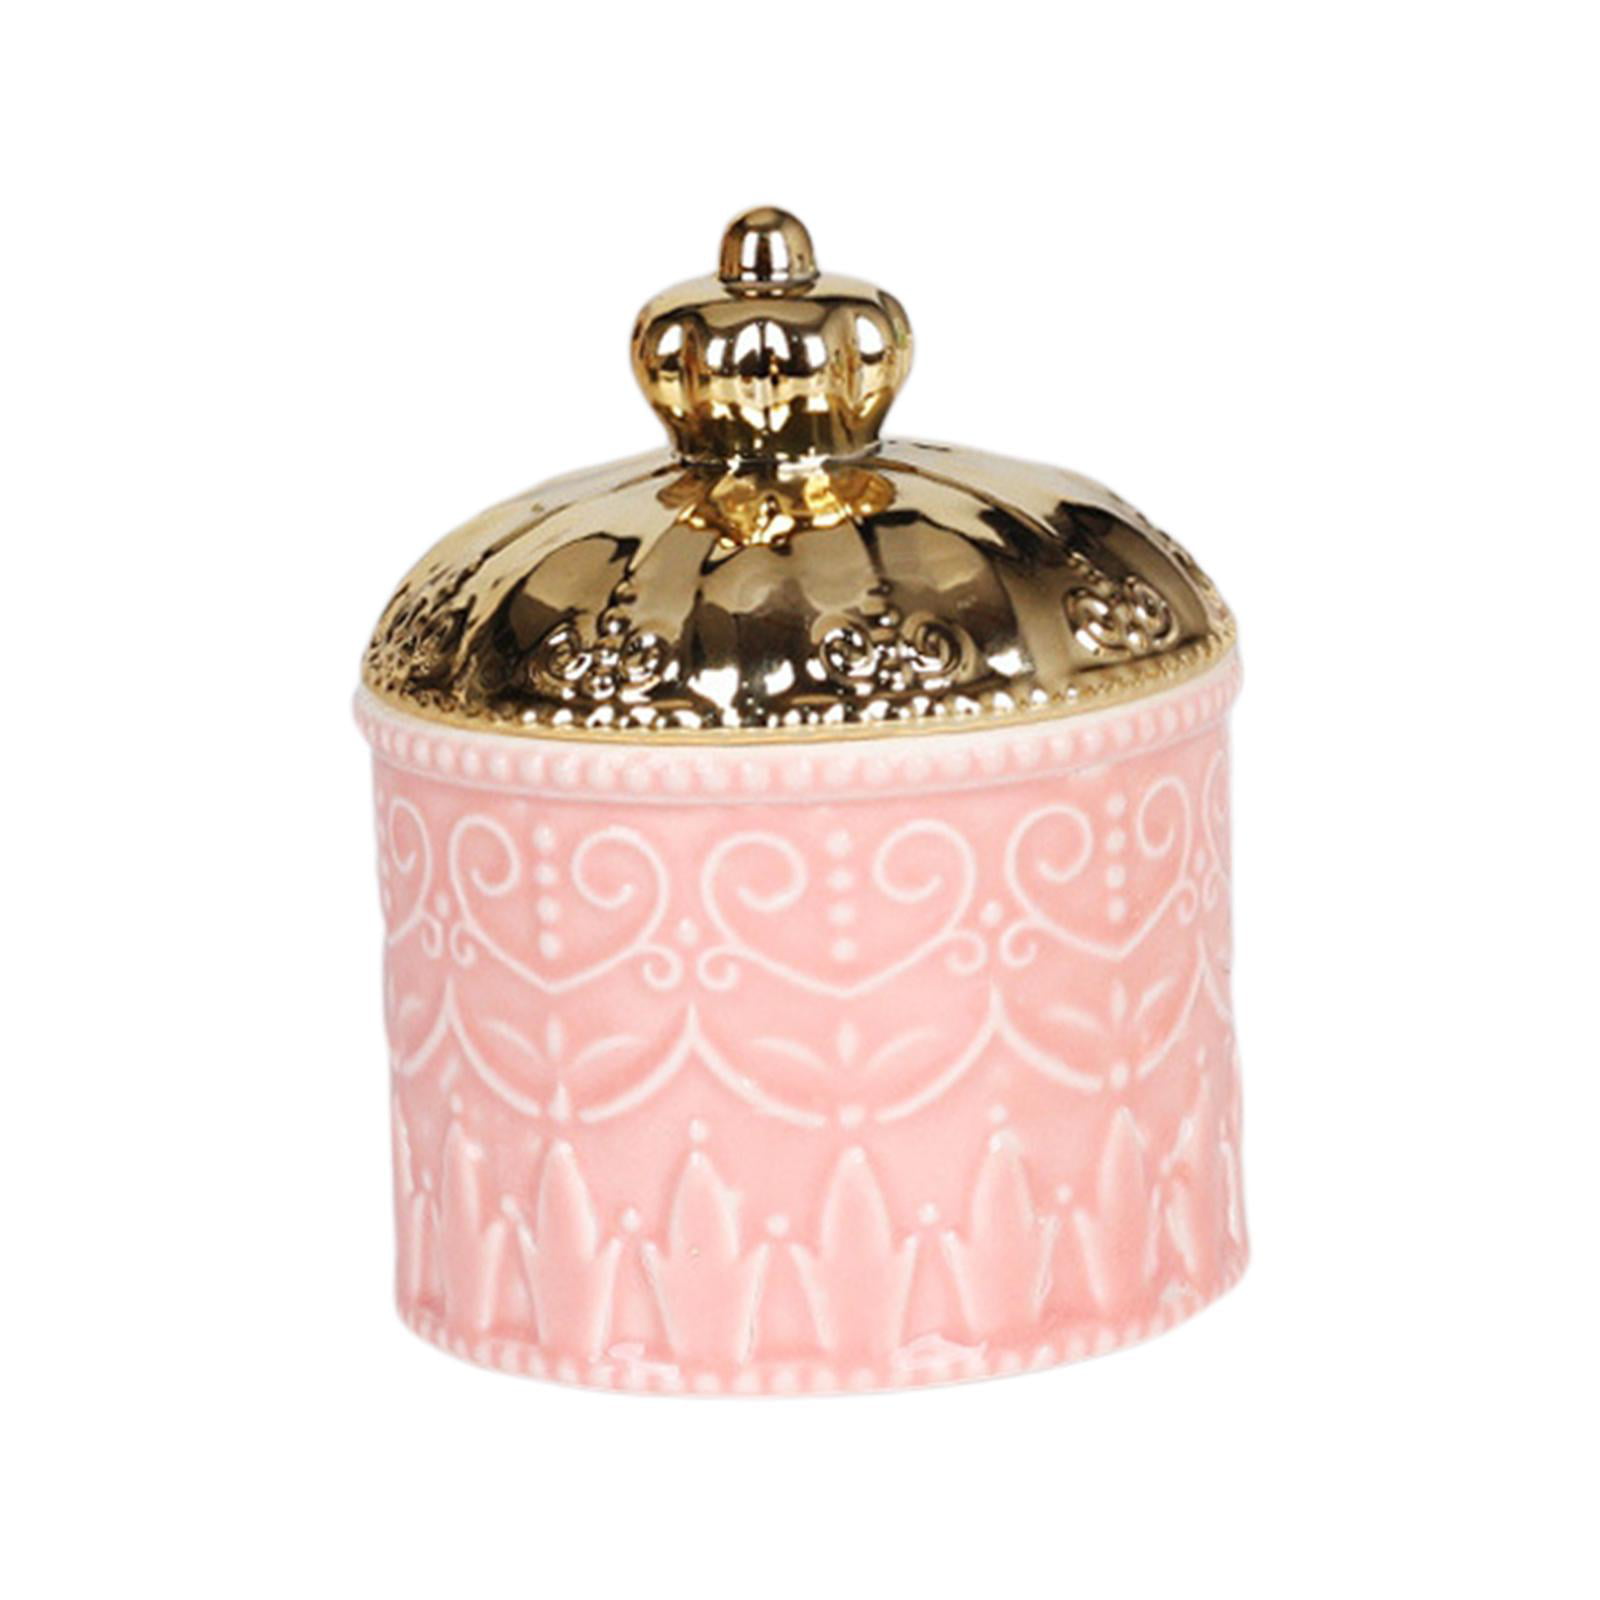 Ceramics Jewelry Box Candy Dish Decorative jar with Lid Storage